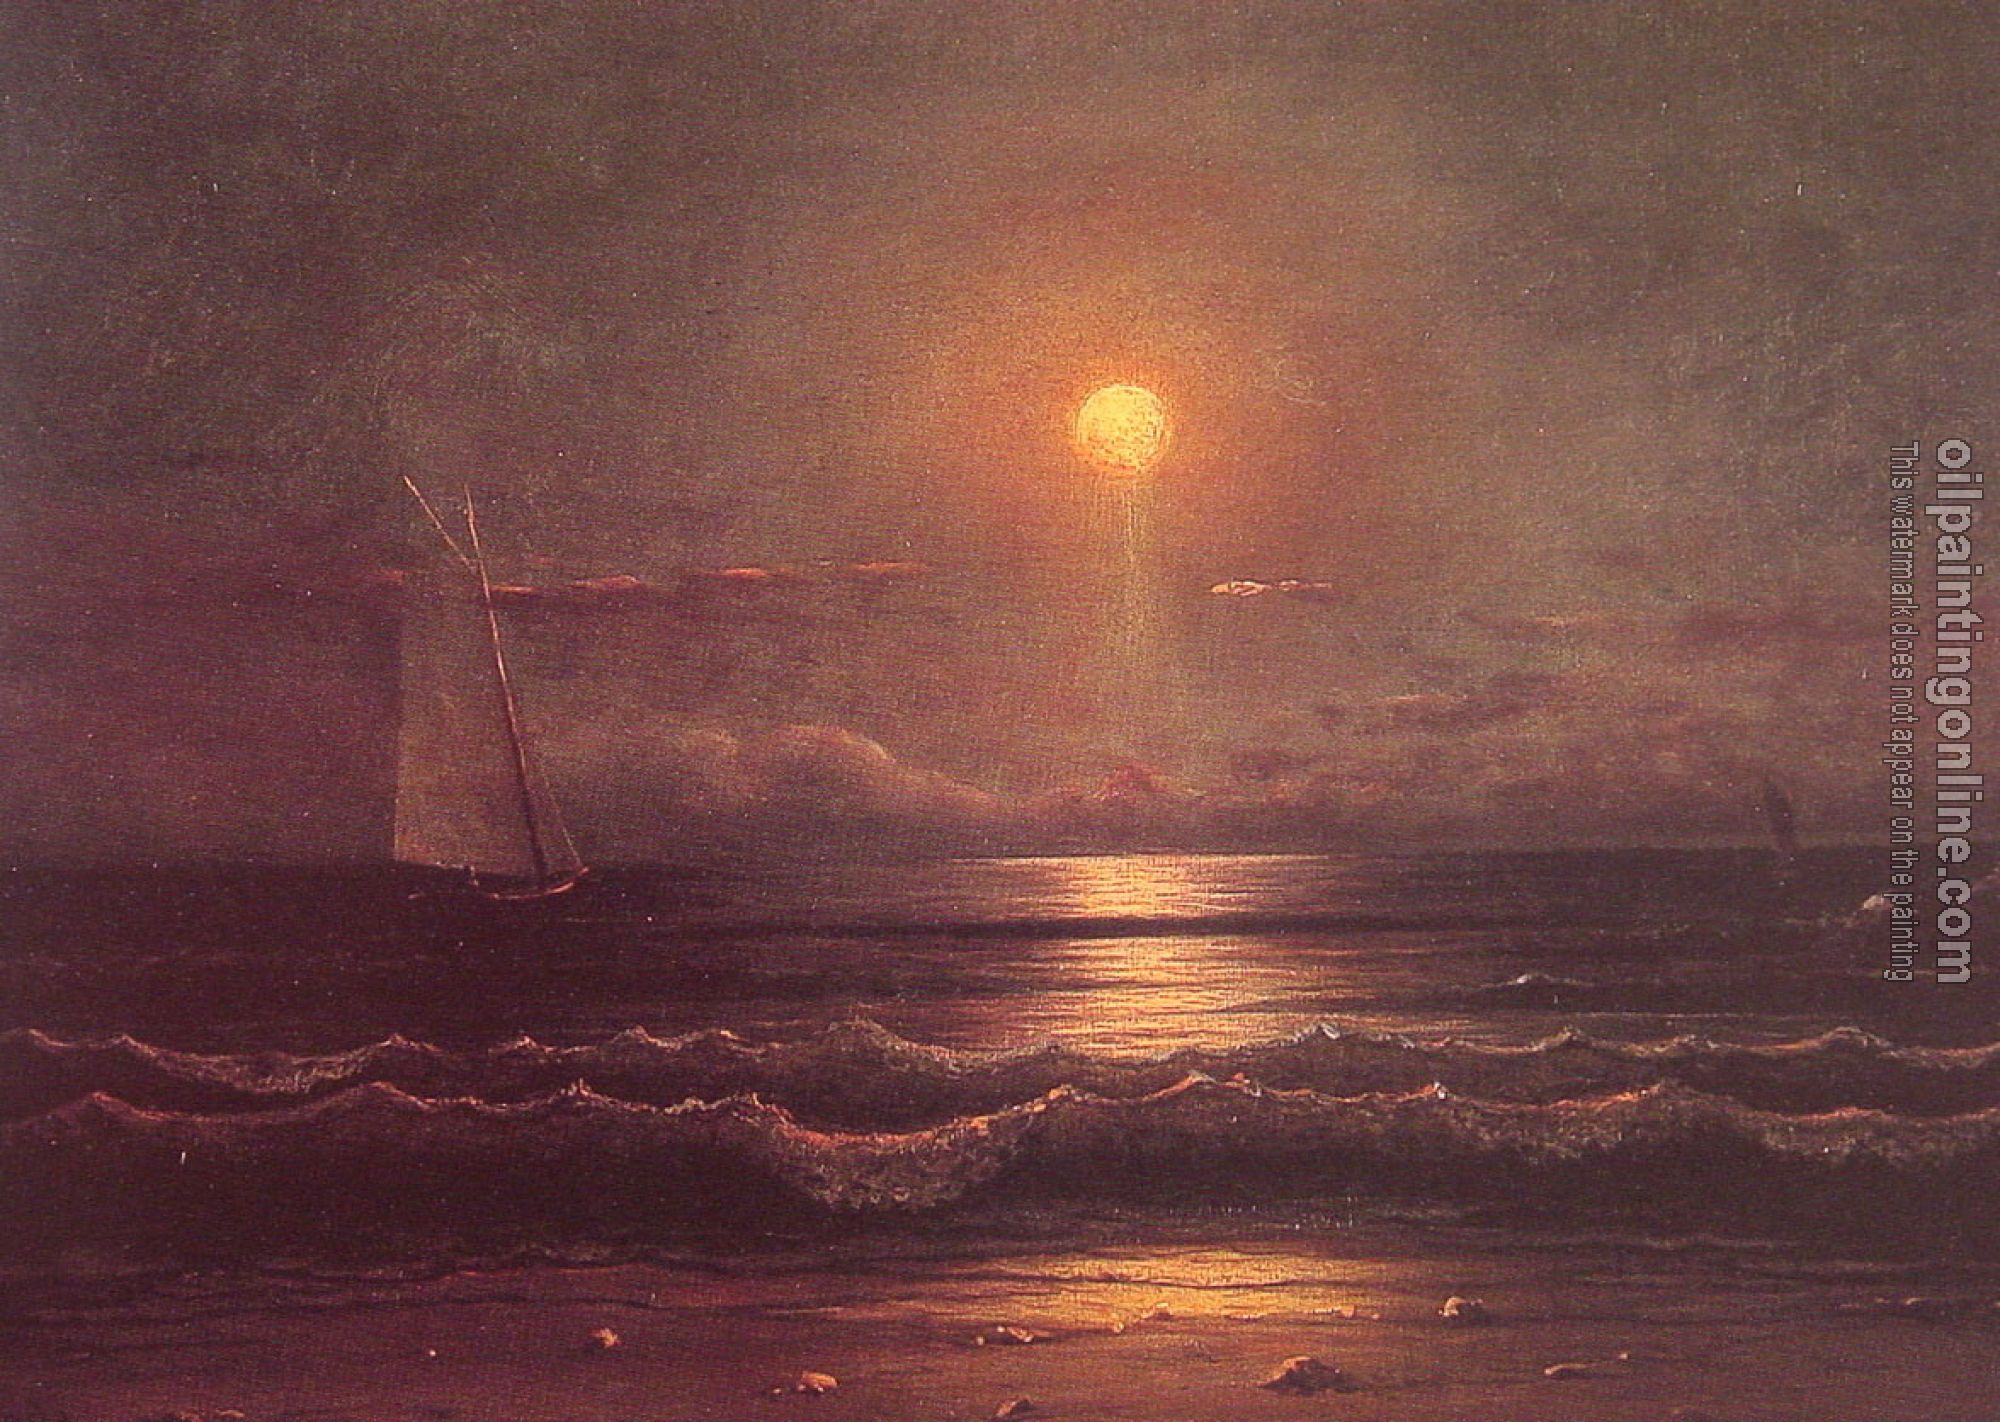 Heade, Martin Johnson - Sailing by Moonlight